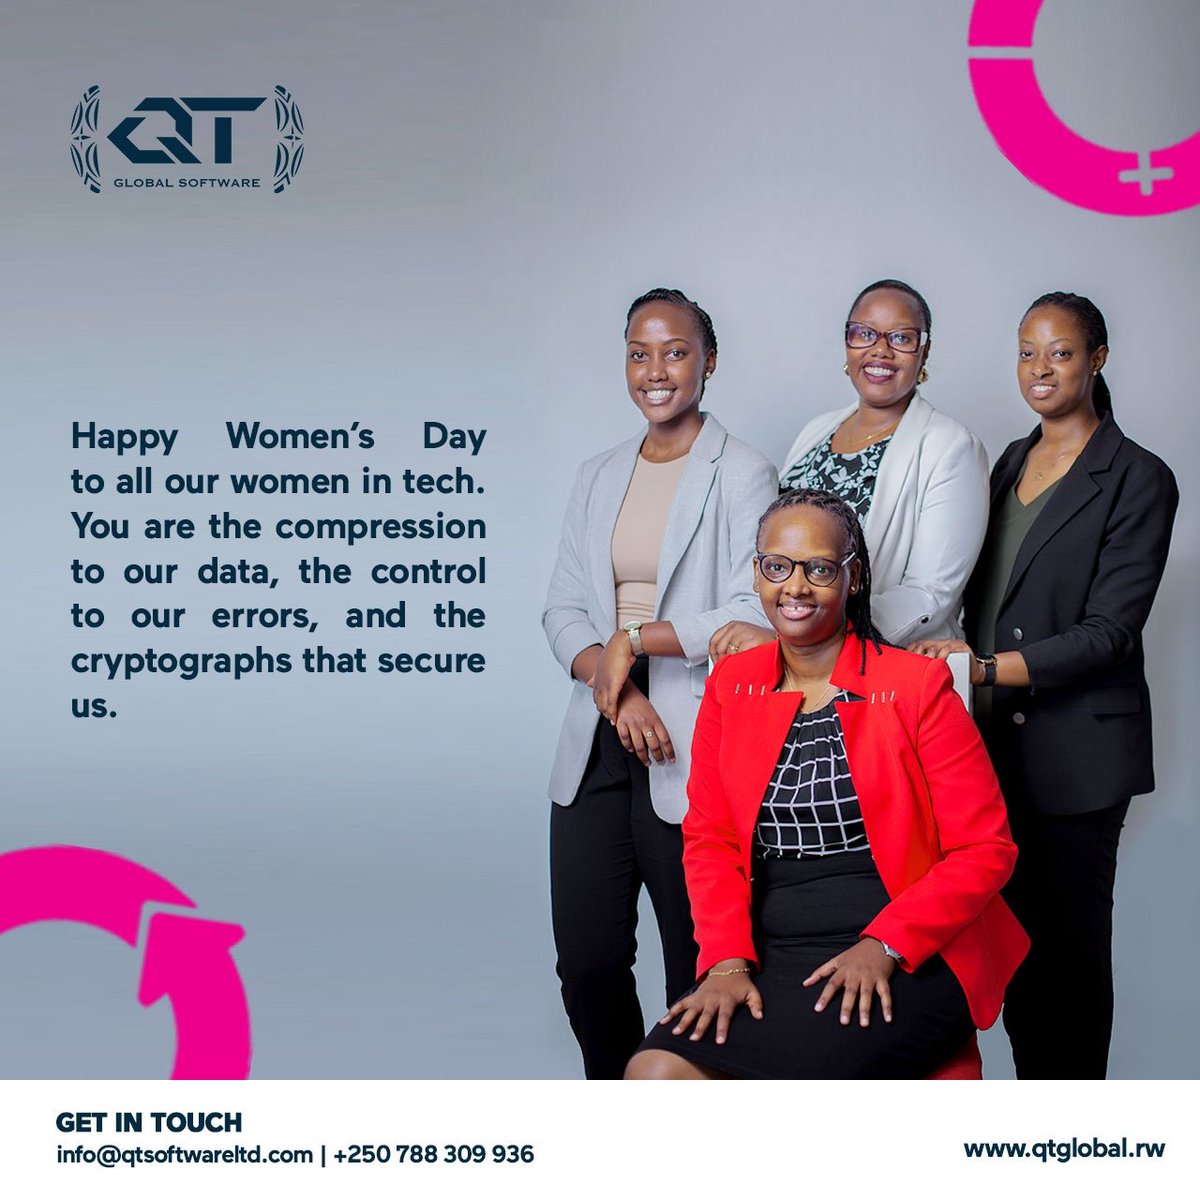 Happy Women's Day 2023!
To the women at QT, you make our world better and brighter 🙏🏾
#IWD2023
#LiftHerUp
#ShyigikiraUmunyarwandakazi